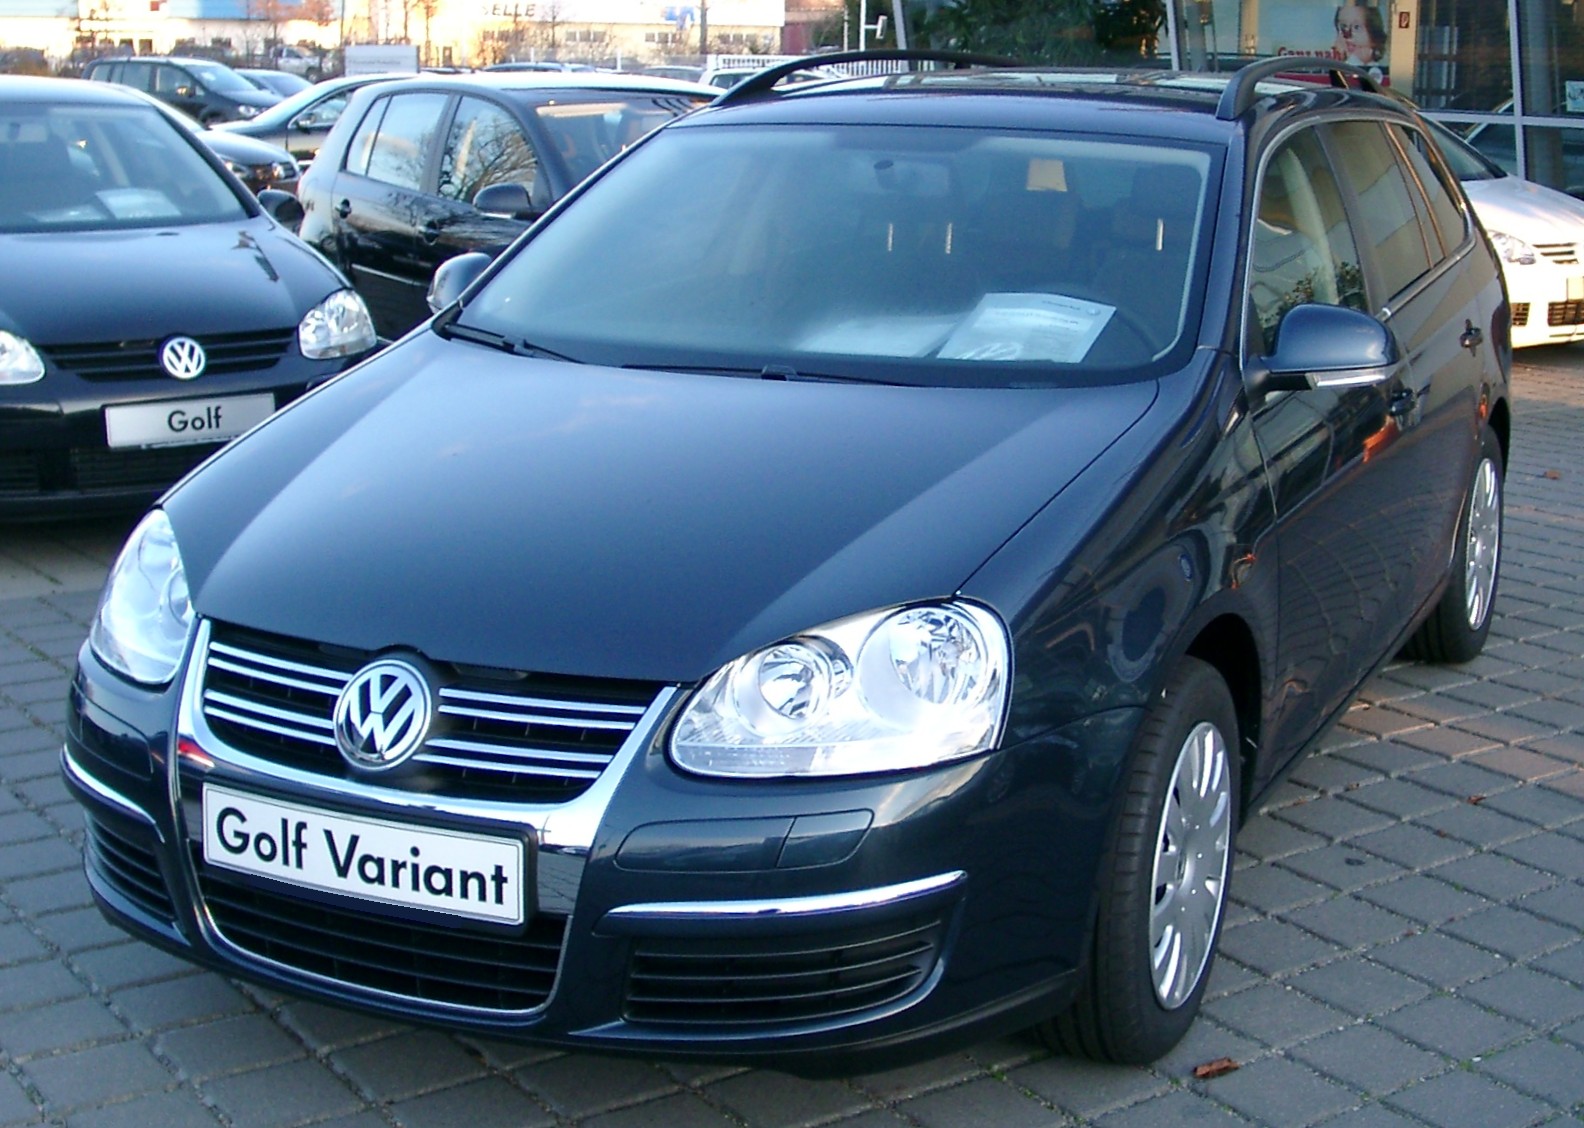 File:VW T4 front 20070926.jpg - Wikimedia Commons